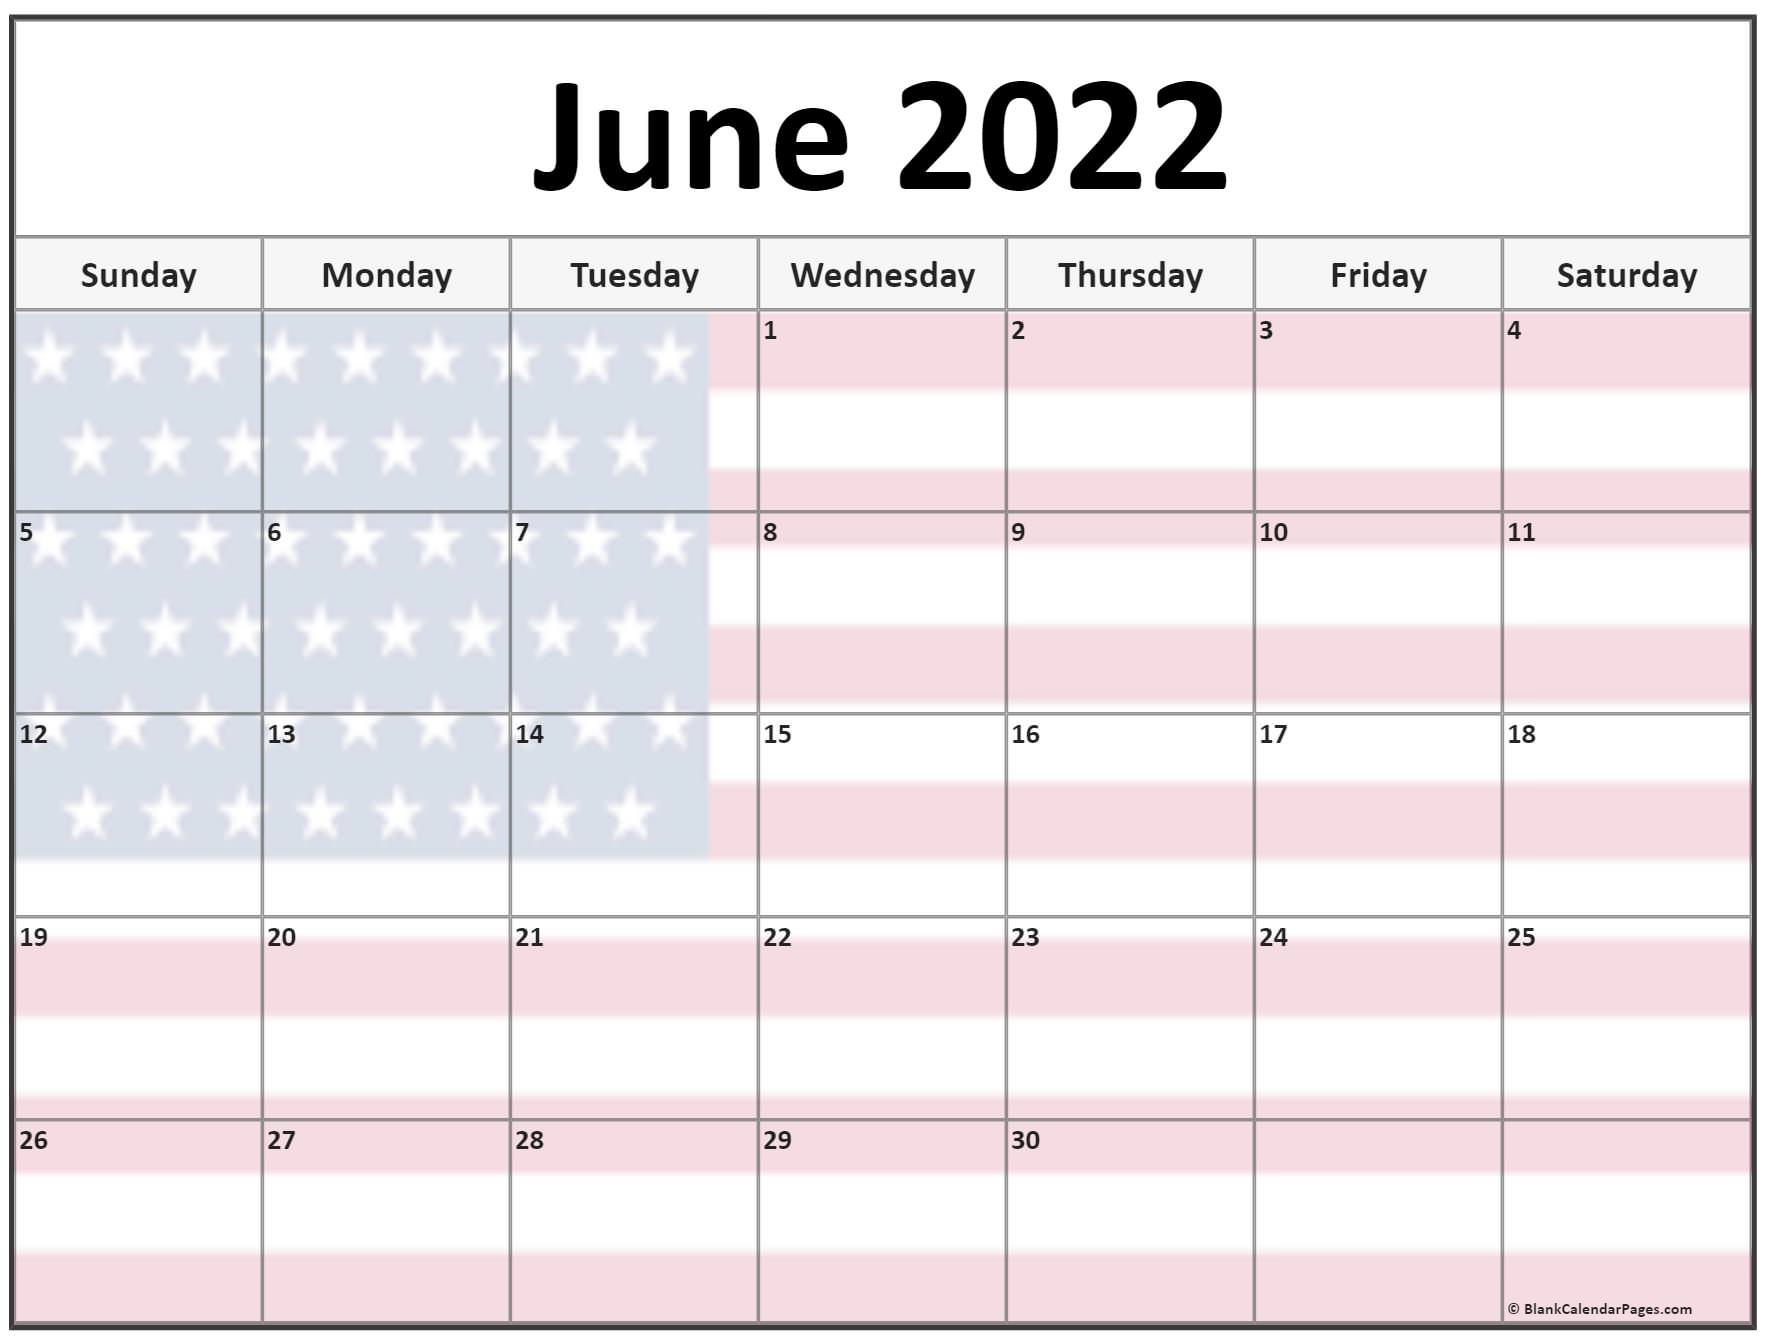 Catch 2022 Calendar For June